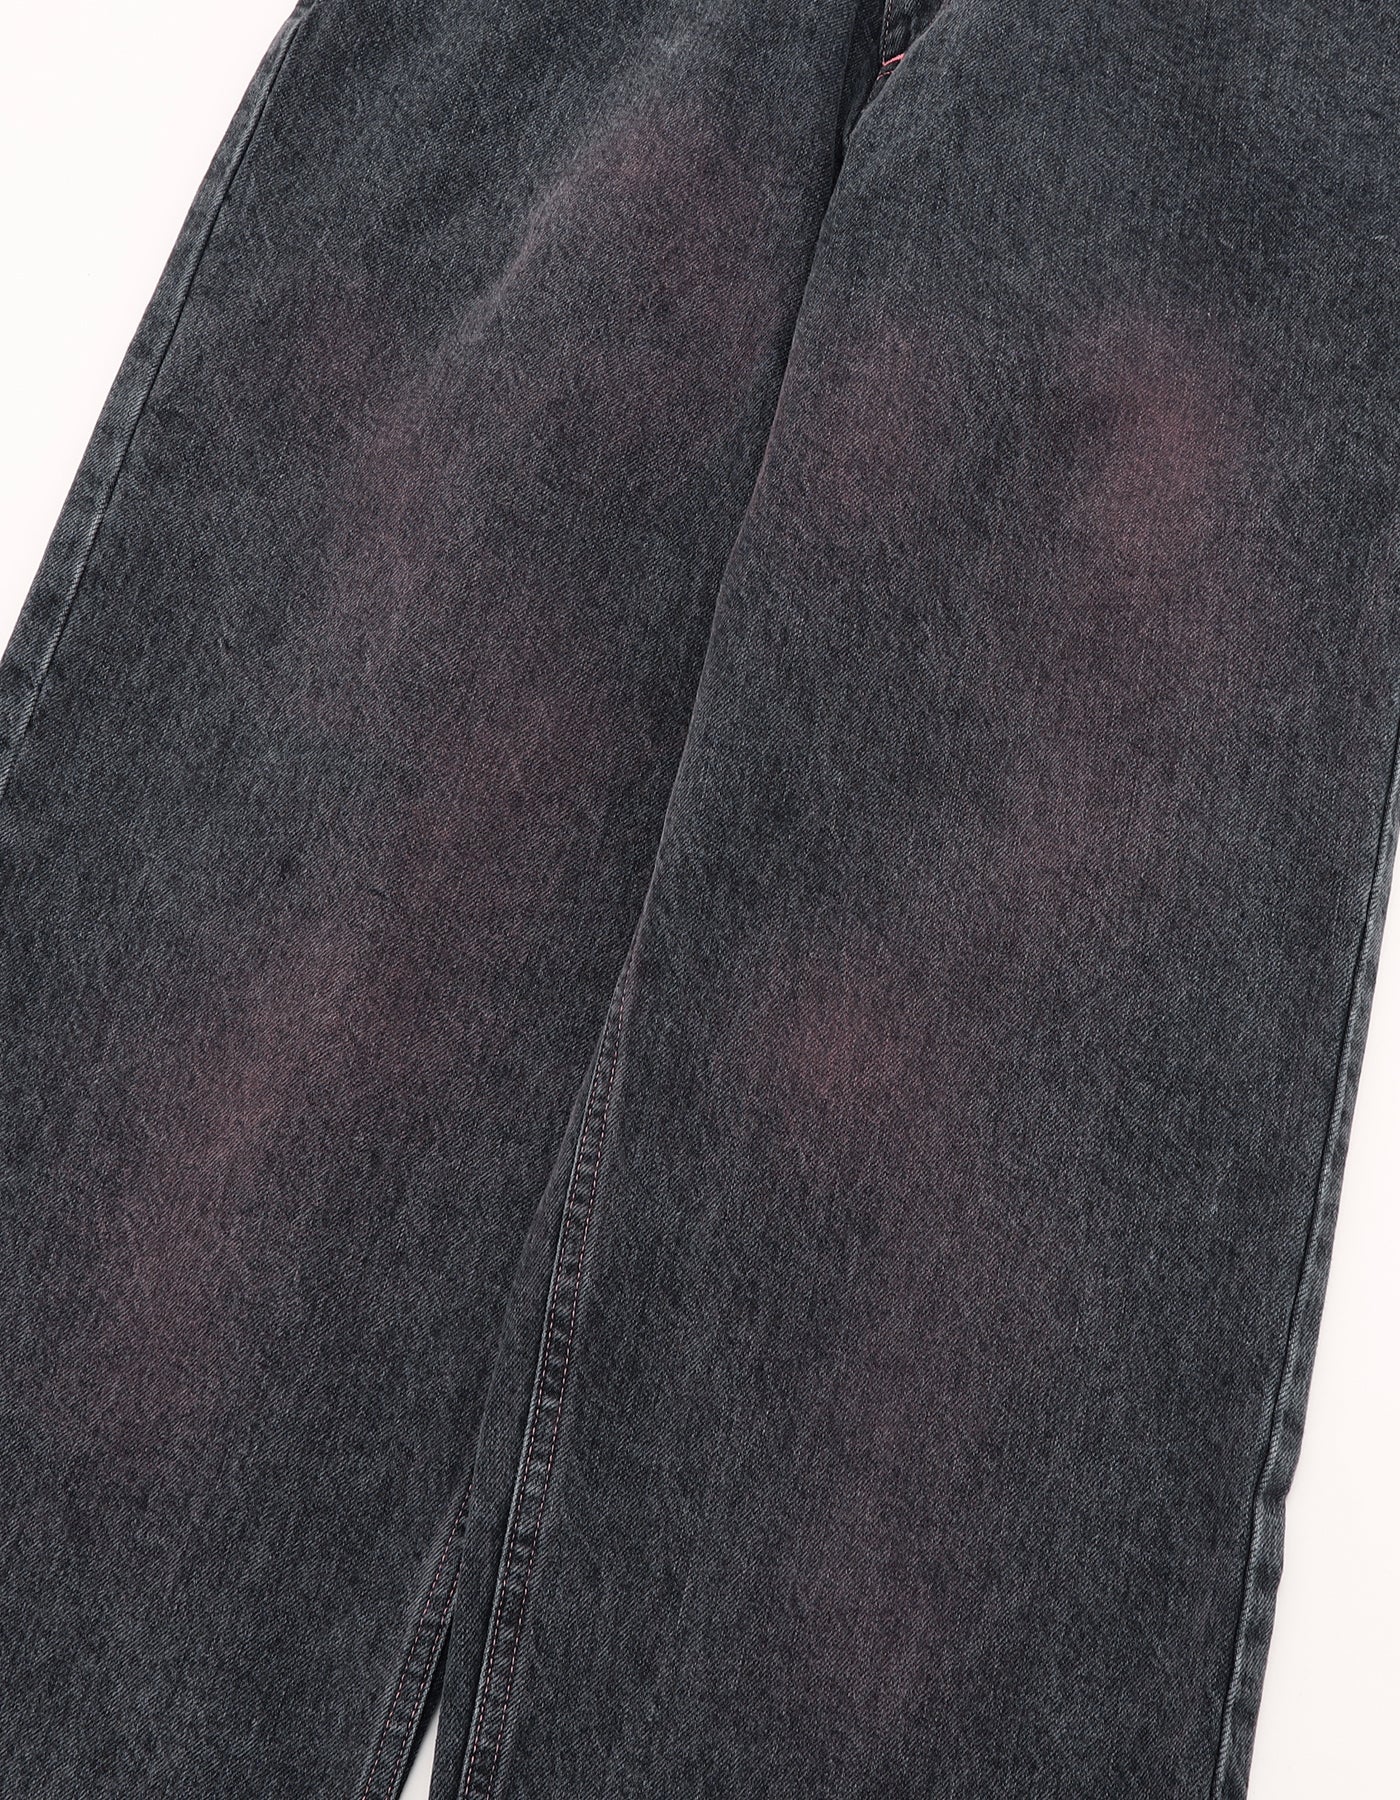 airbrushed denim pants / BLACK